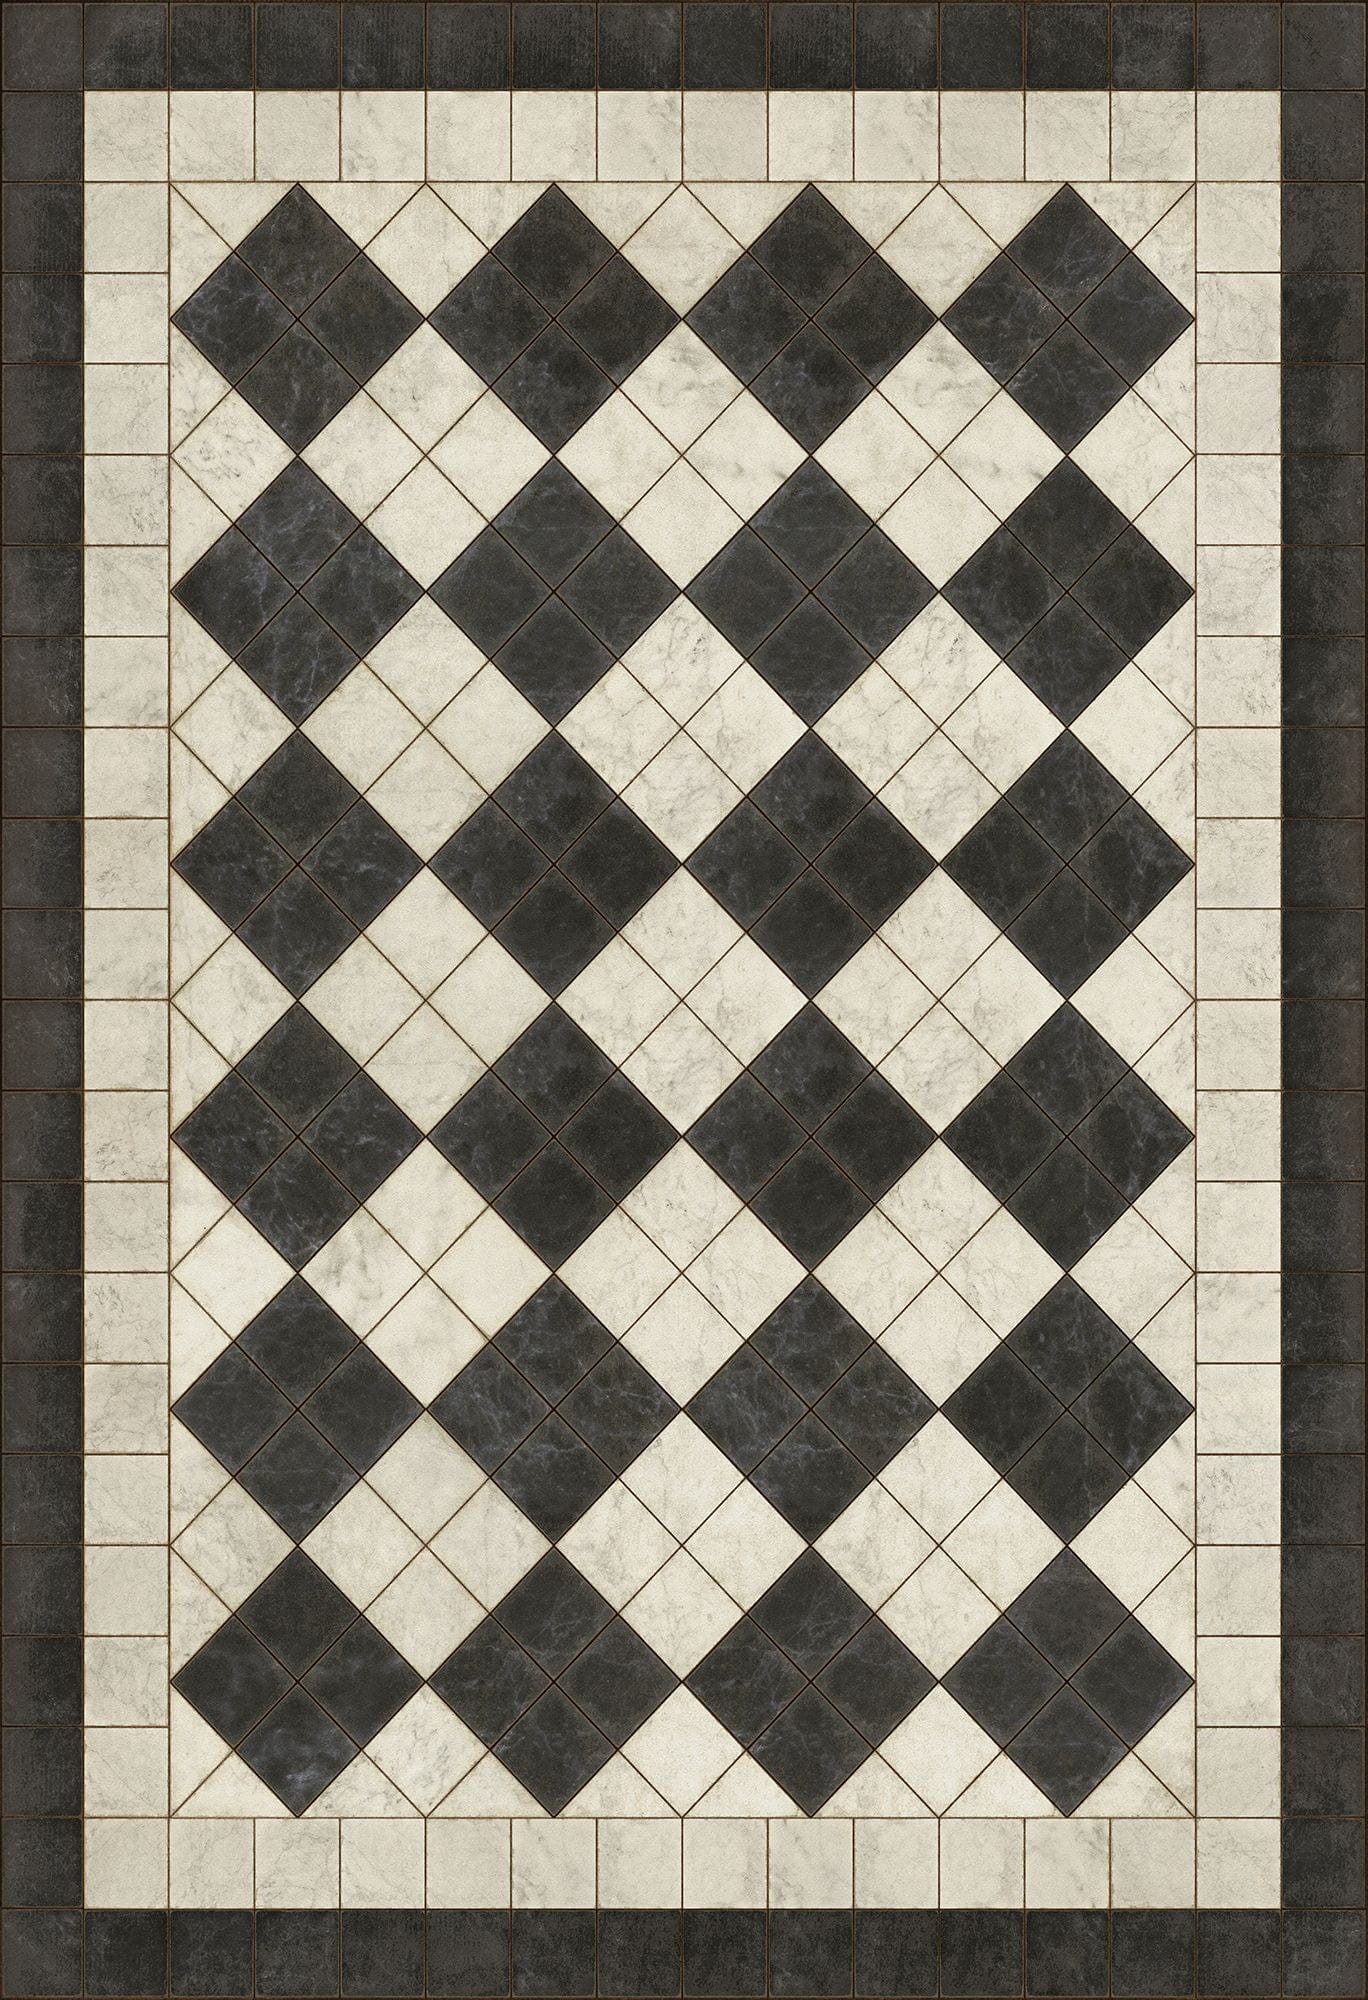 Pattern 65